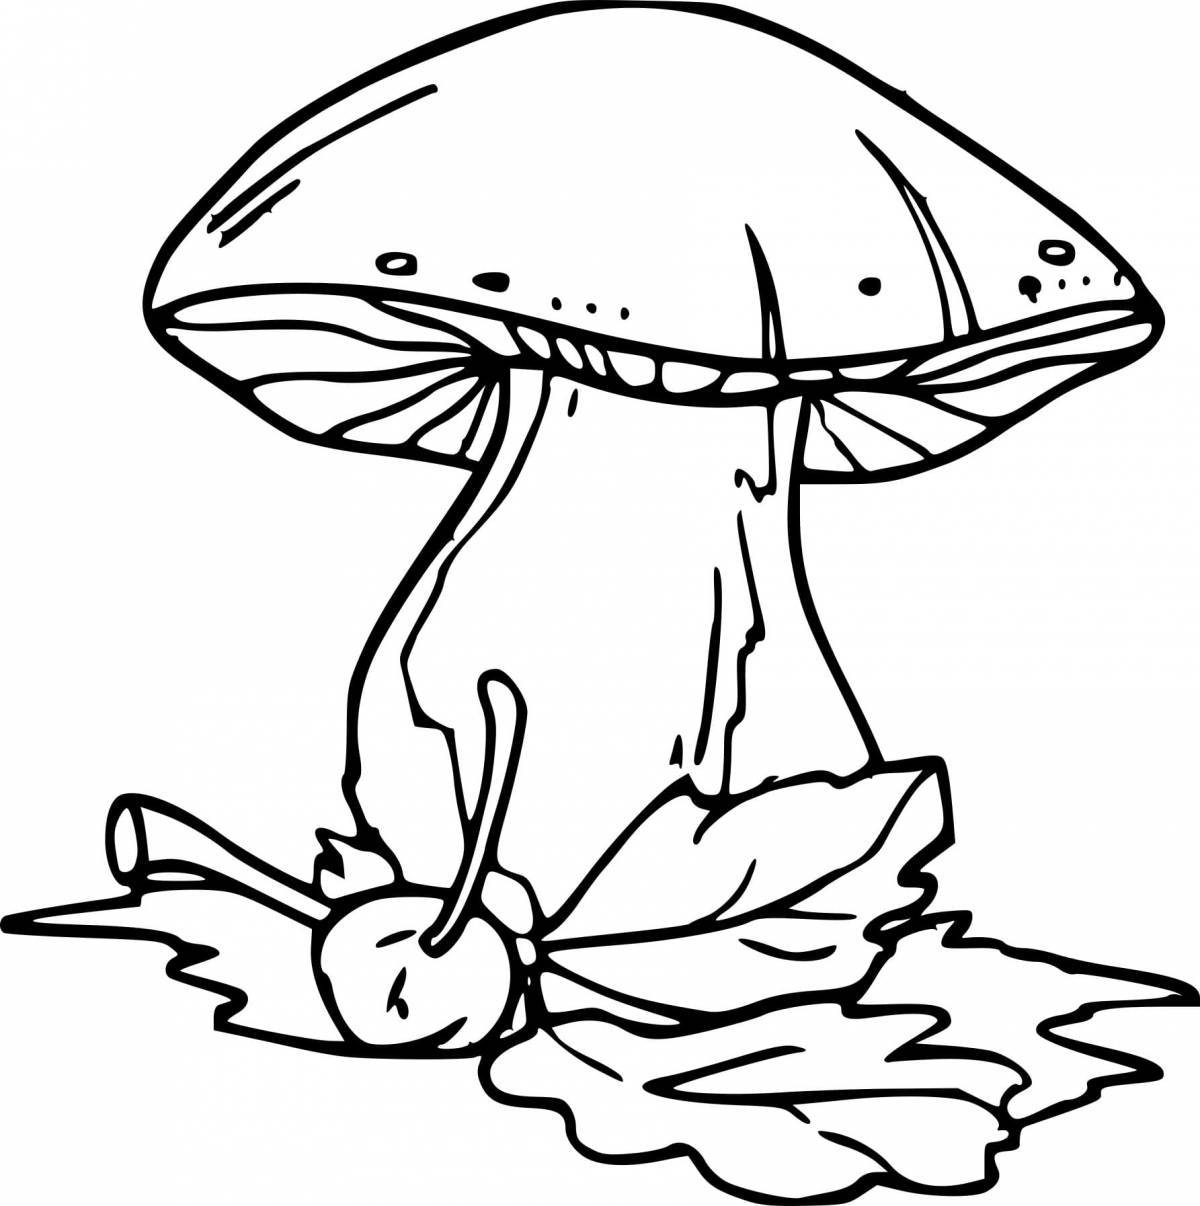 Color Explosive Mushroom Coloring Page